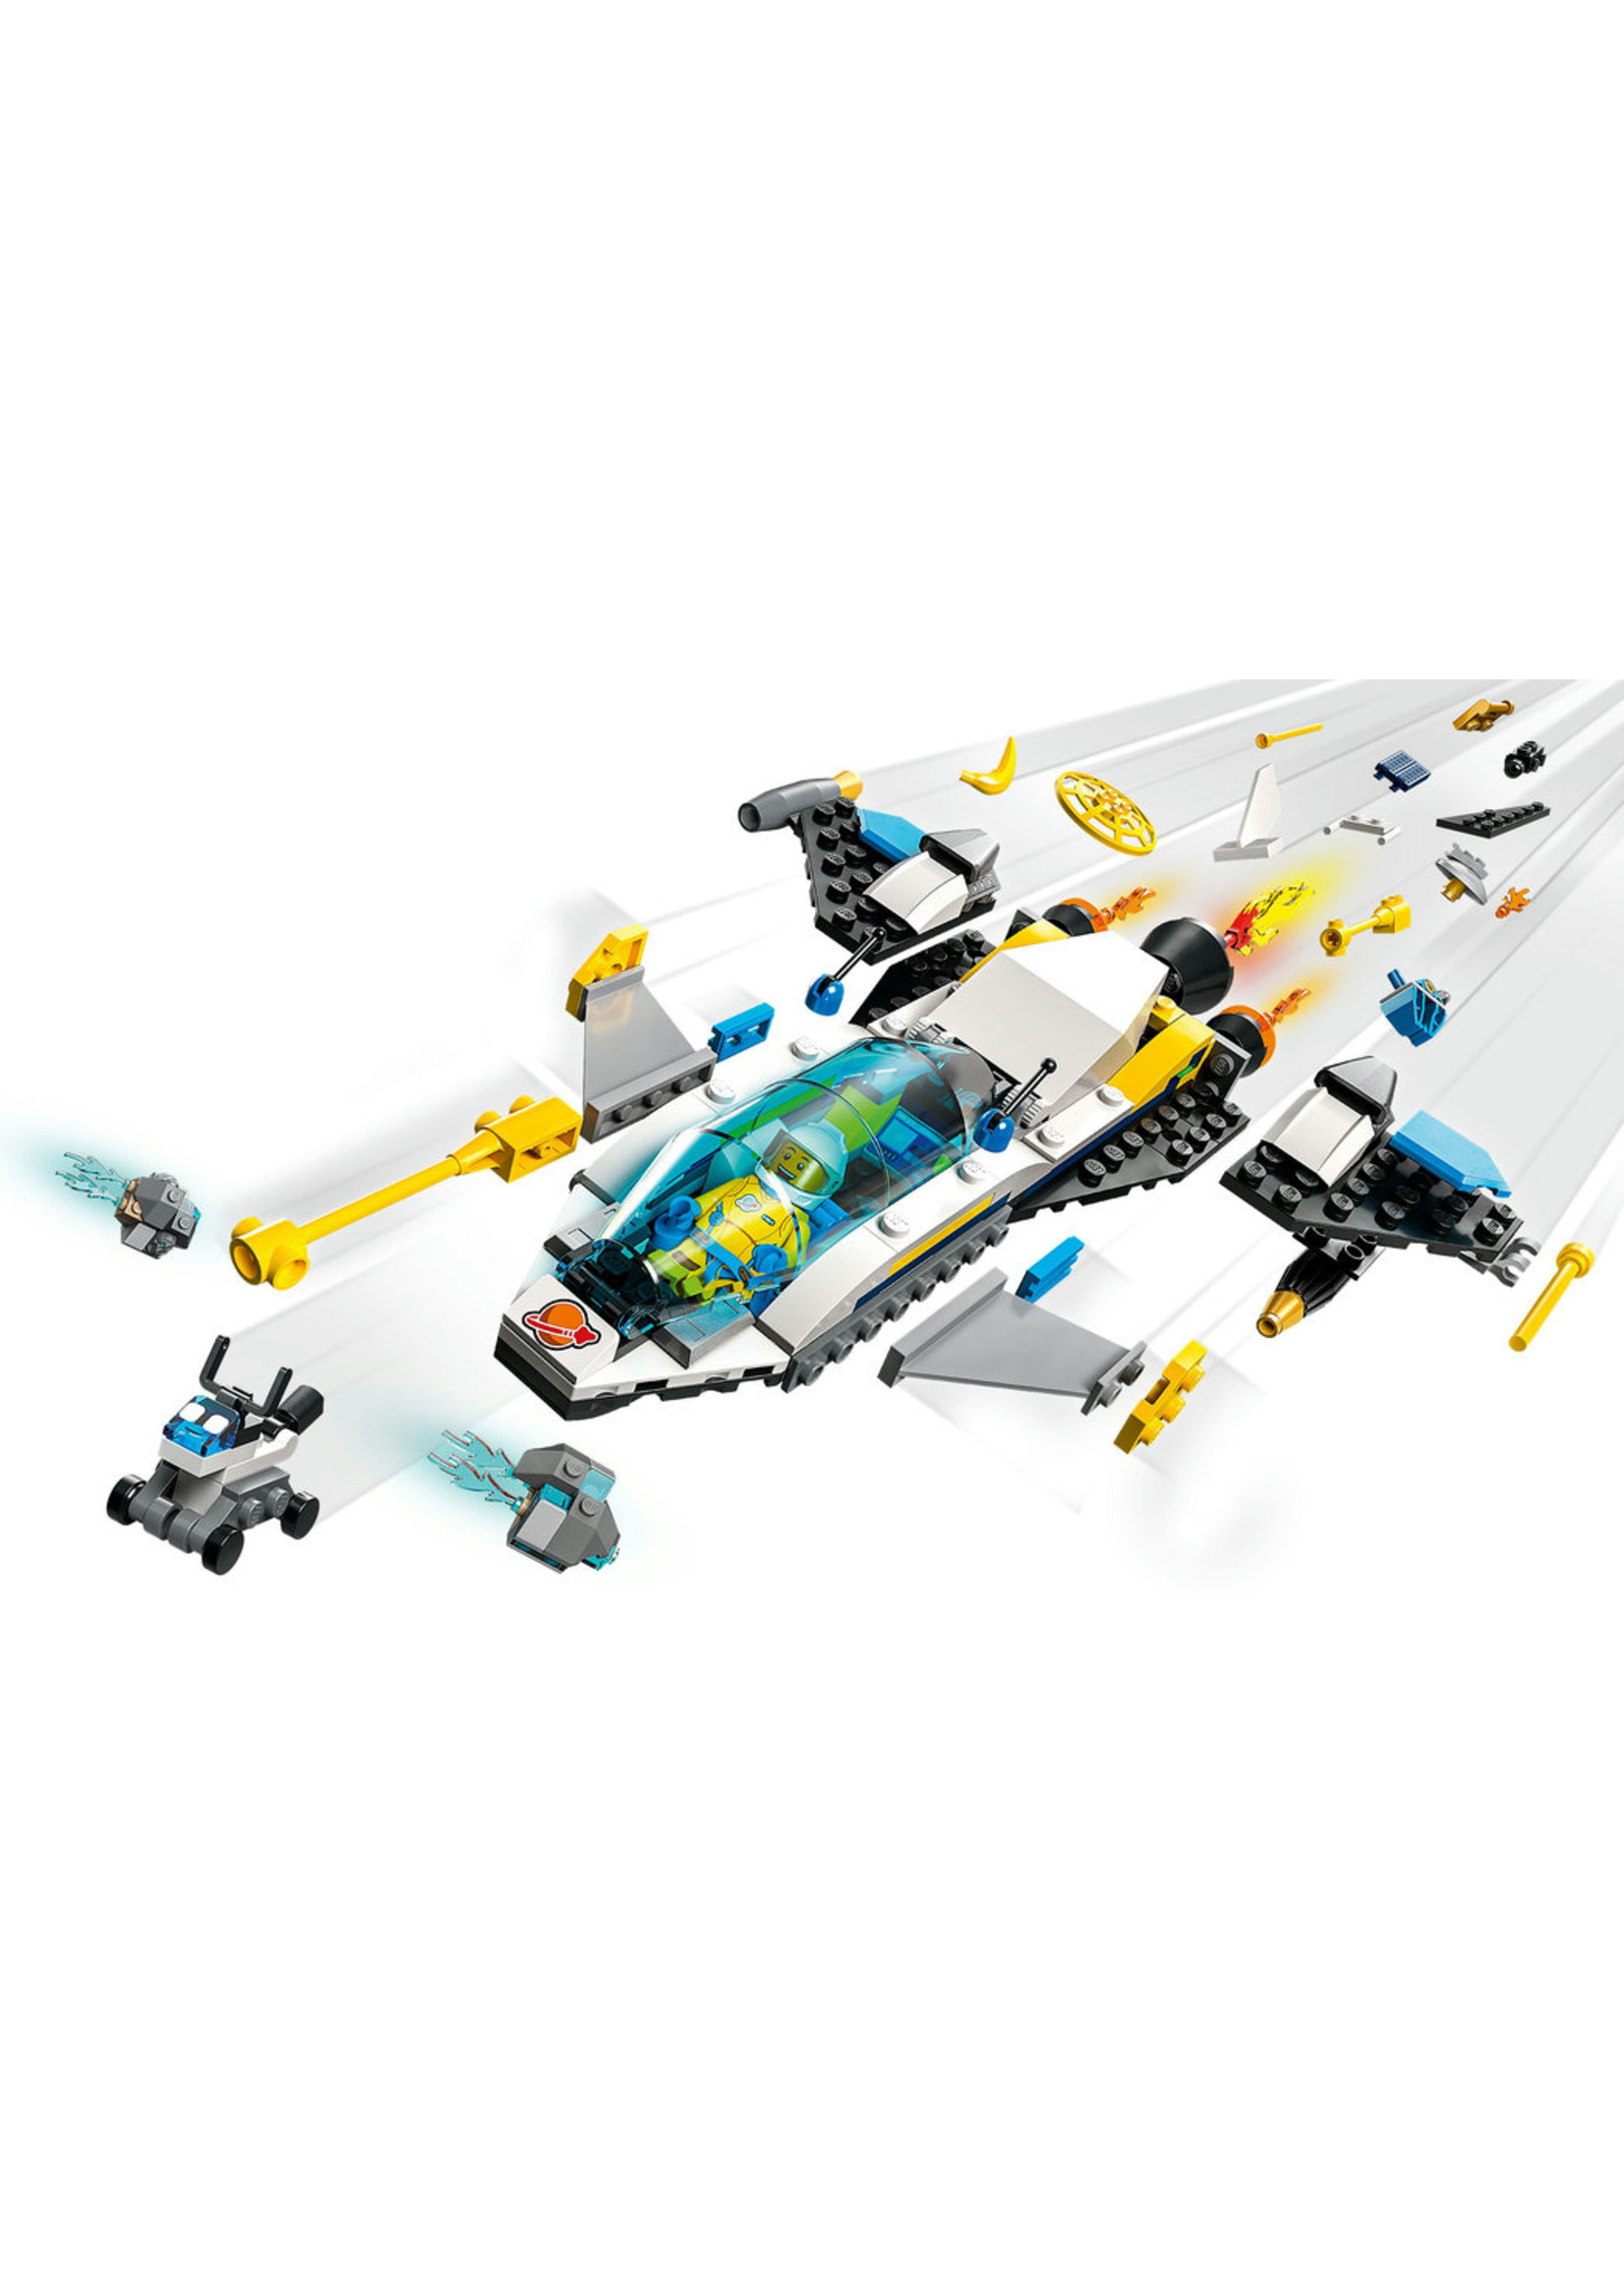 LEGO 60354 - Mars Spacecraft Exploration Missions